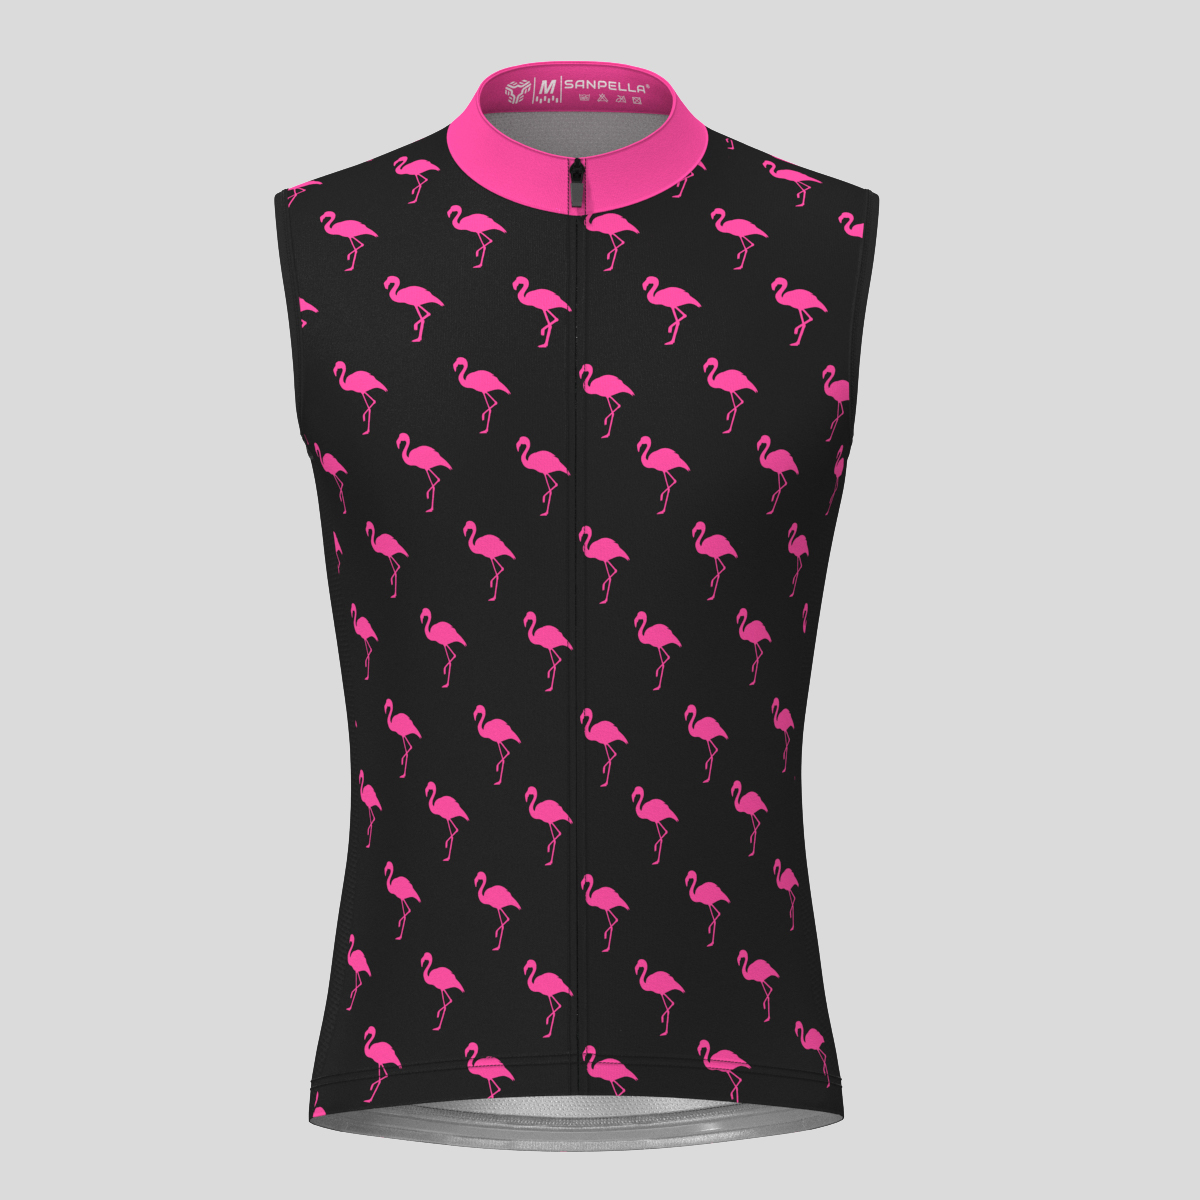 Flamingo Men's Sleeveless Cycling Jersey - Pink/Black